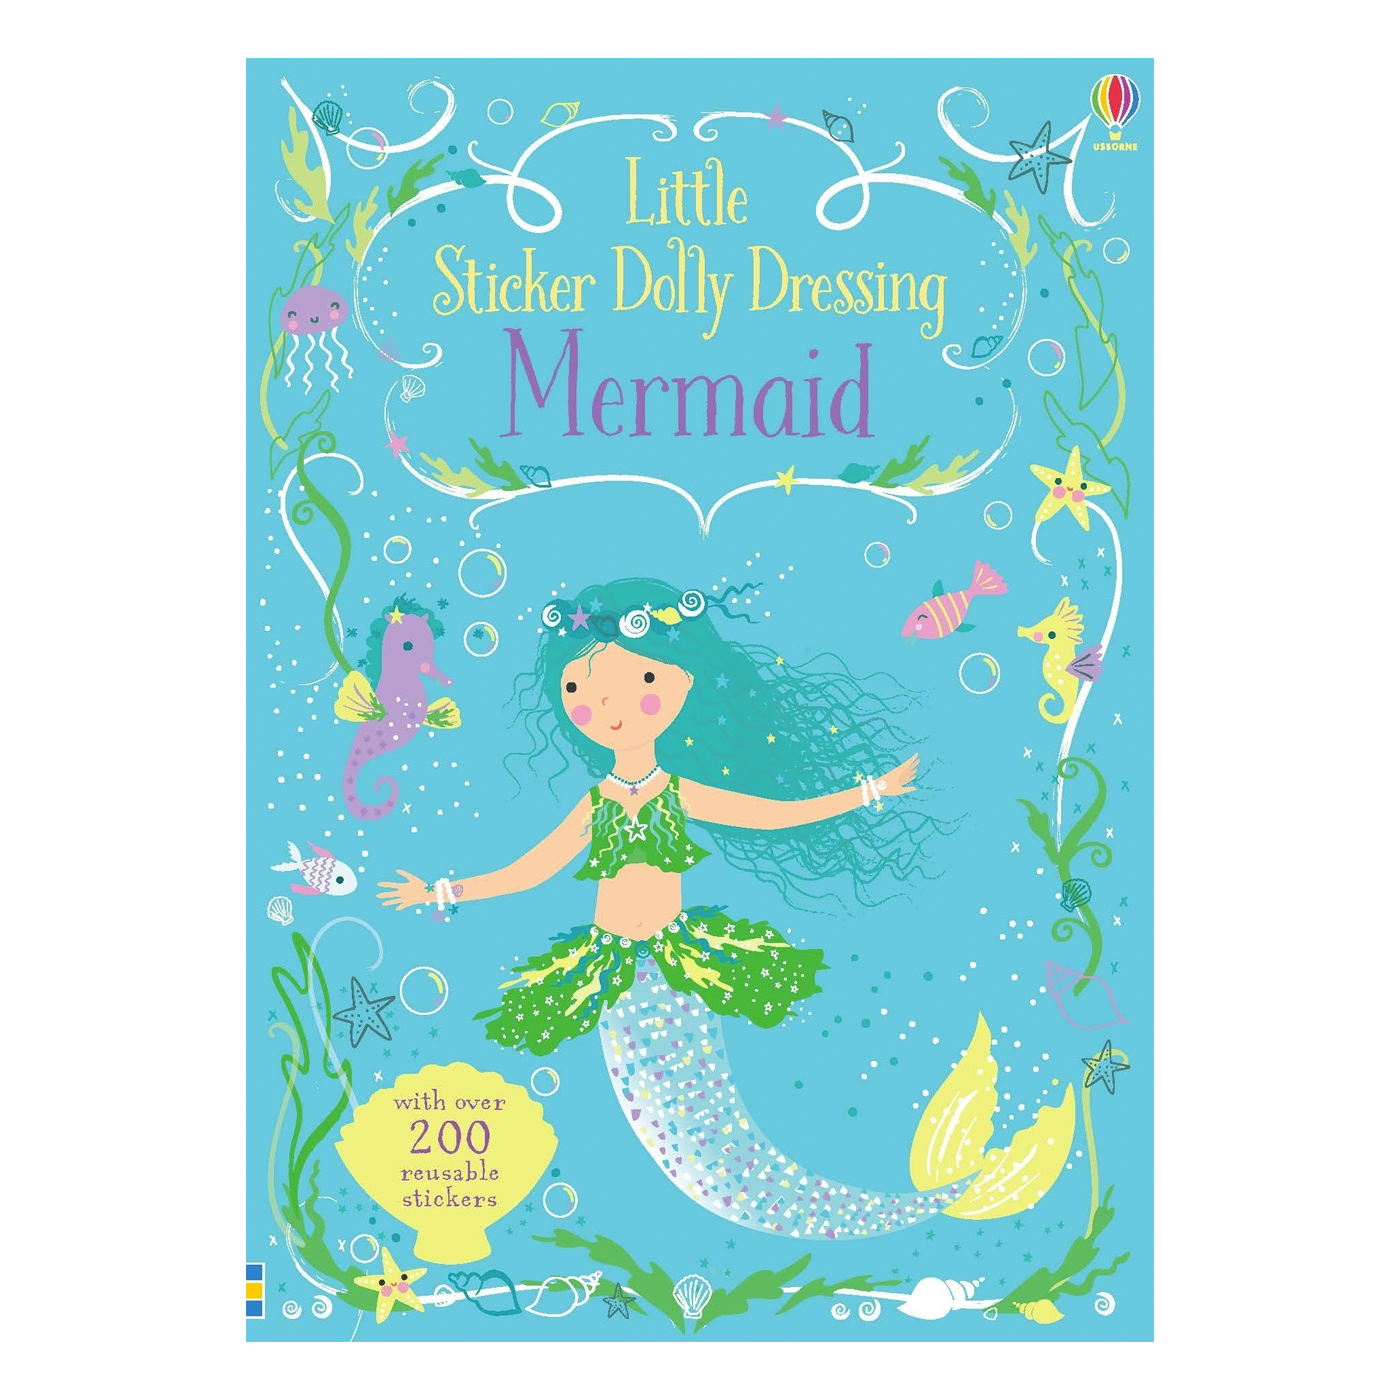  Little Sticker Dolly Dressing Mermaid